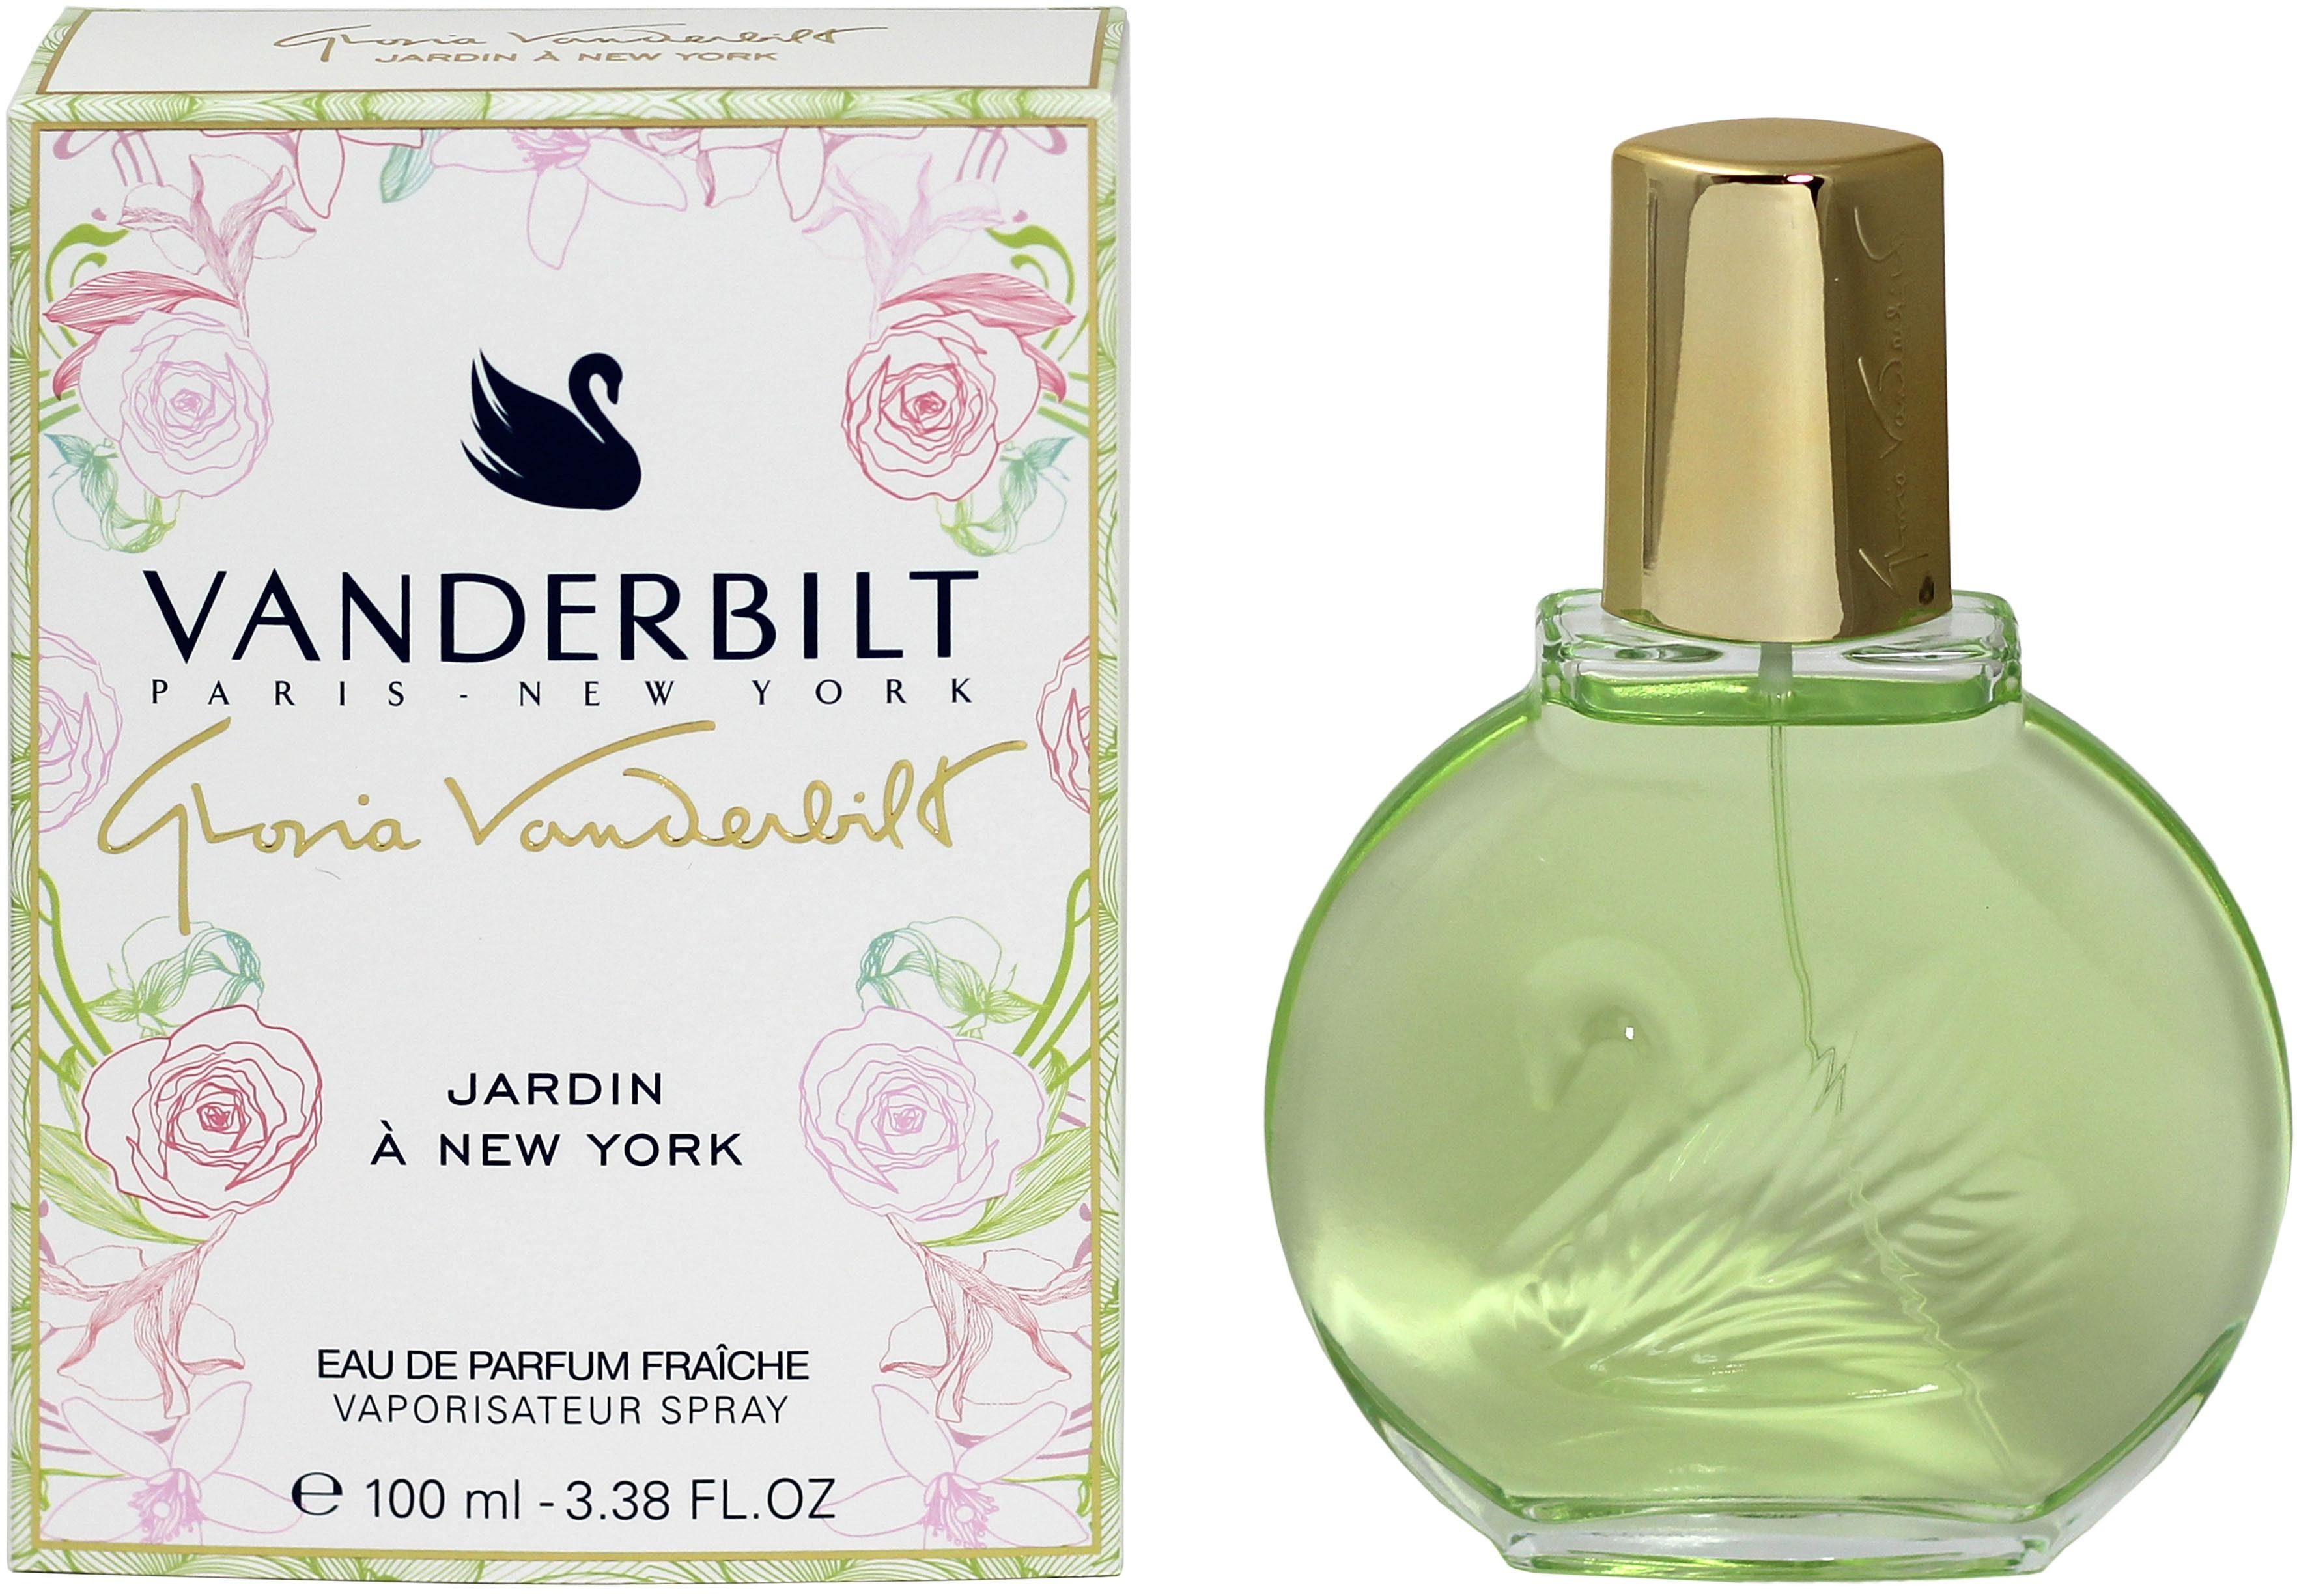 VANDERBILT Eau de Parfum Vanderbilt York New Jardin á